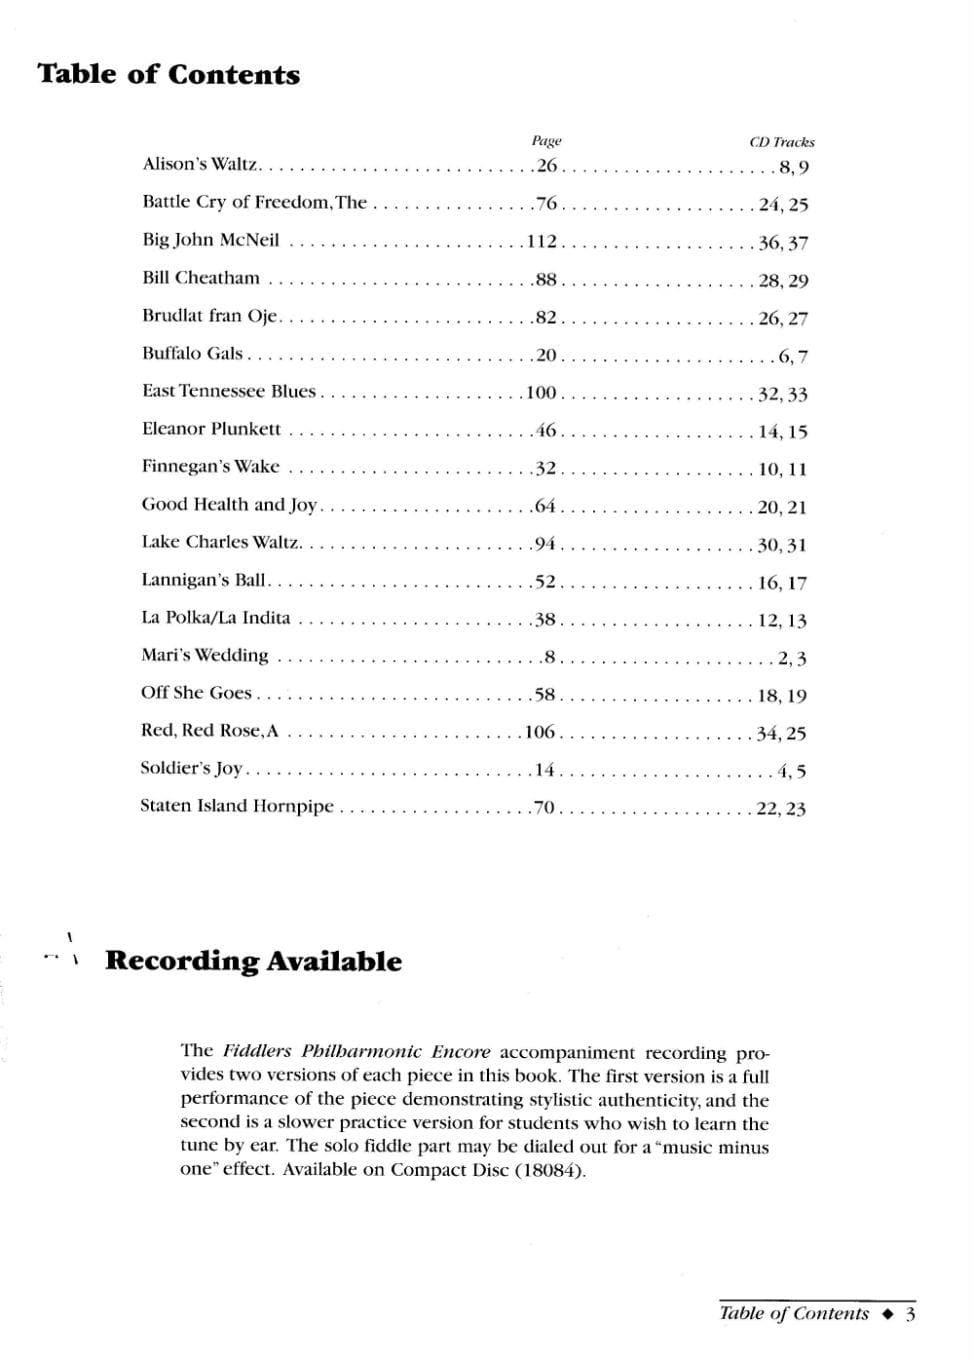 Phillips/Dabczynski - Fiddler Philharmonic Encore Score Published by Mel Bay Publications, Inc